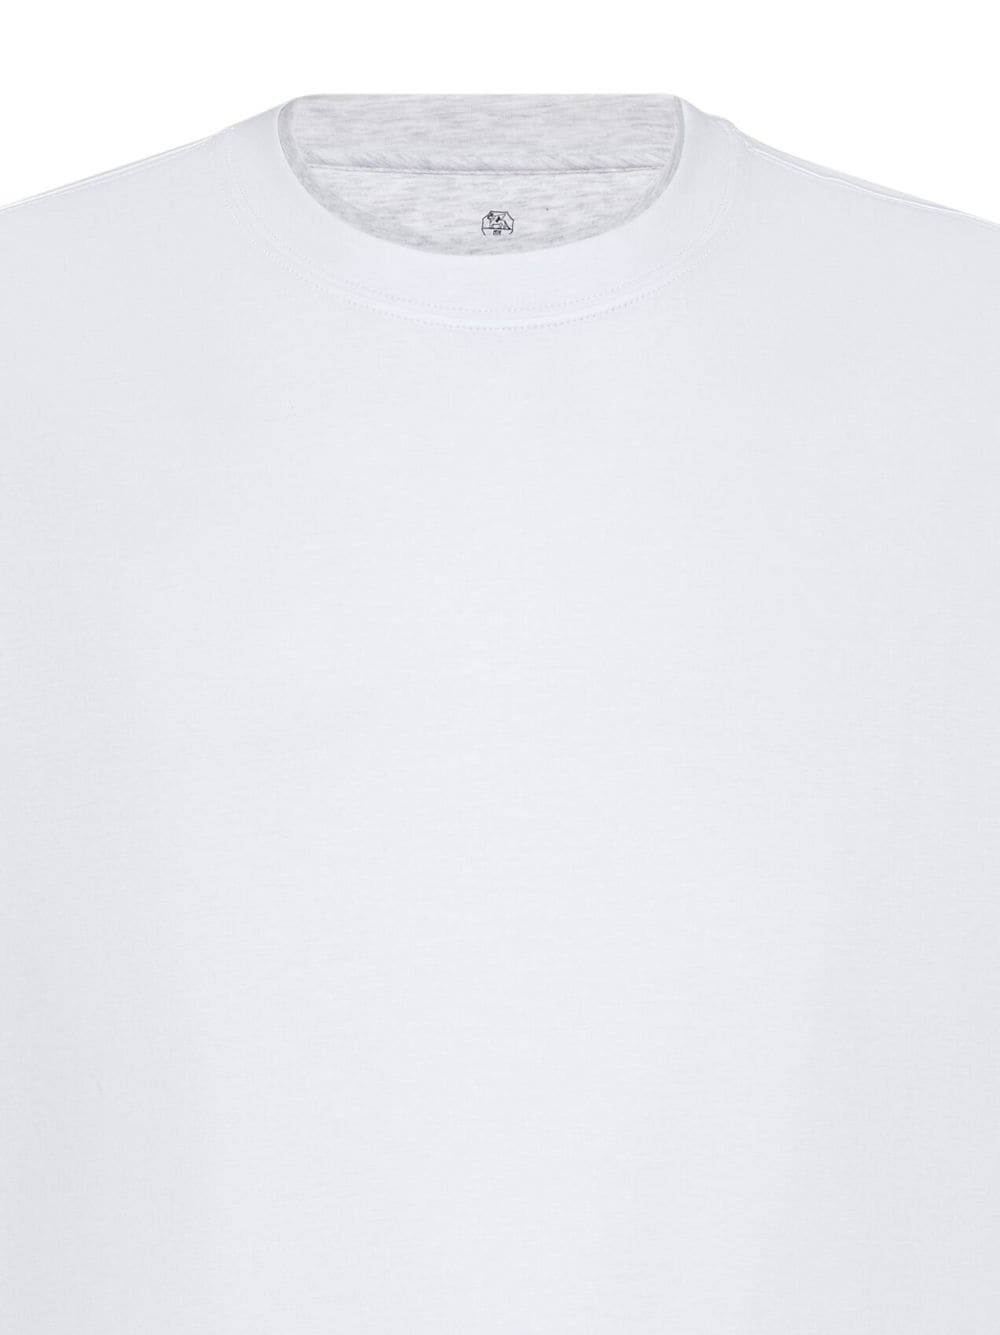 T-shirt blanc avec logo